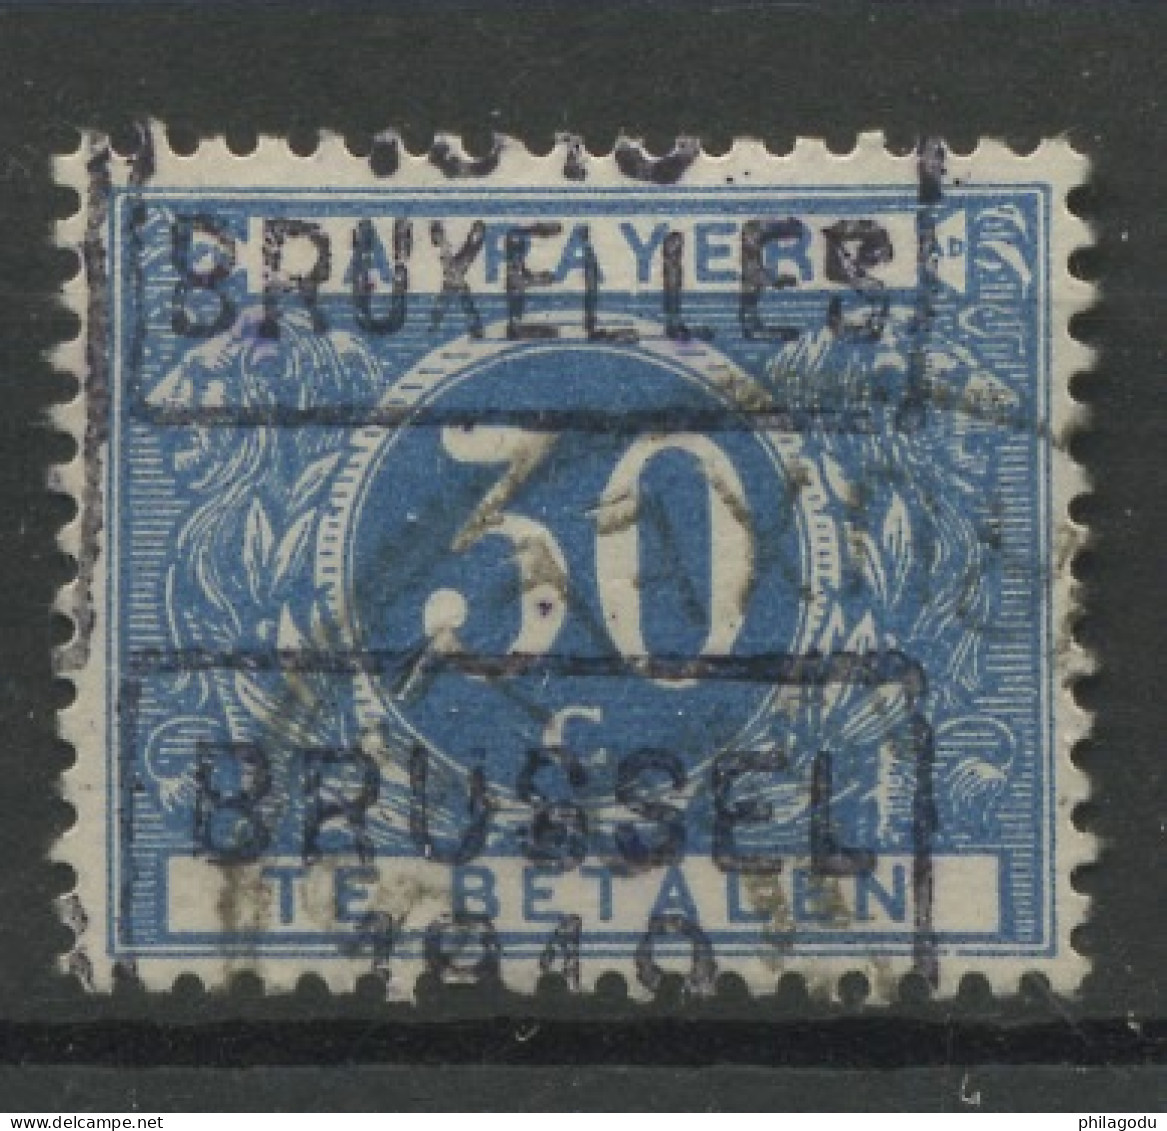 Taxe Ø  15A    Cote 22,50€   Nom De Ville    Naamstempel - Stamps